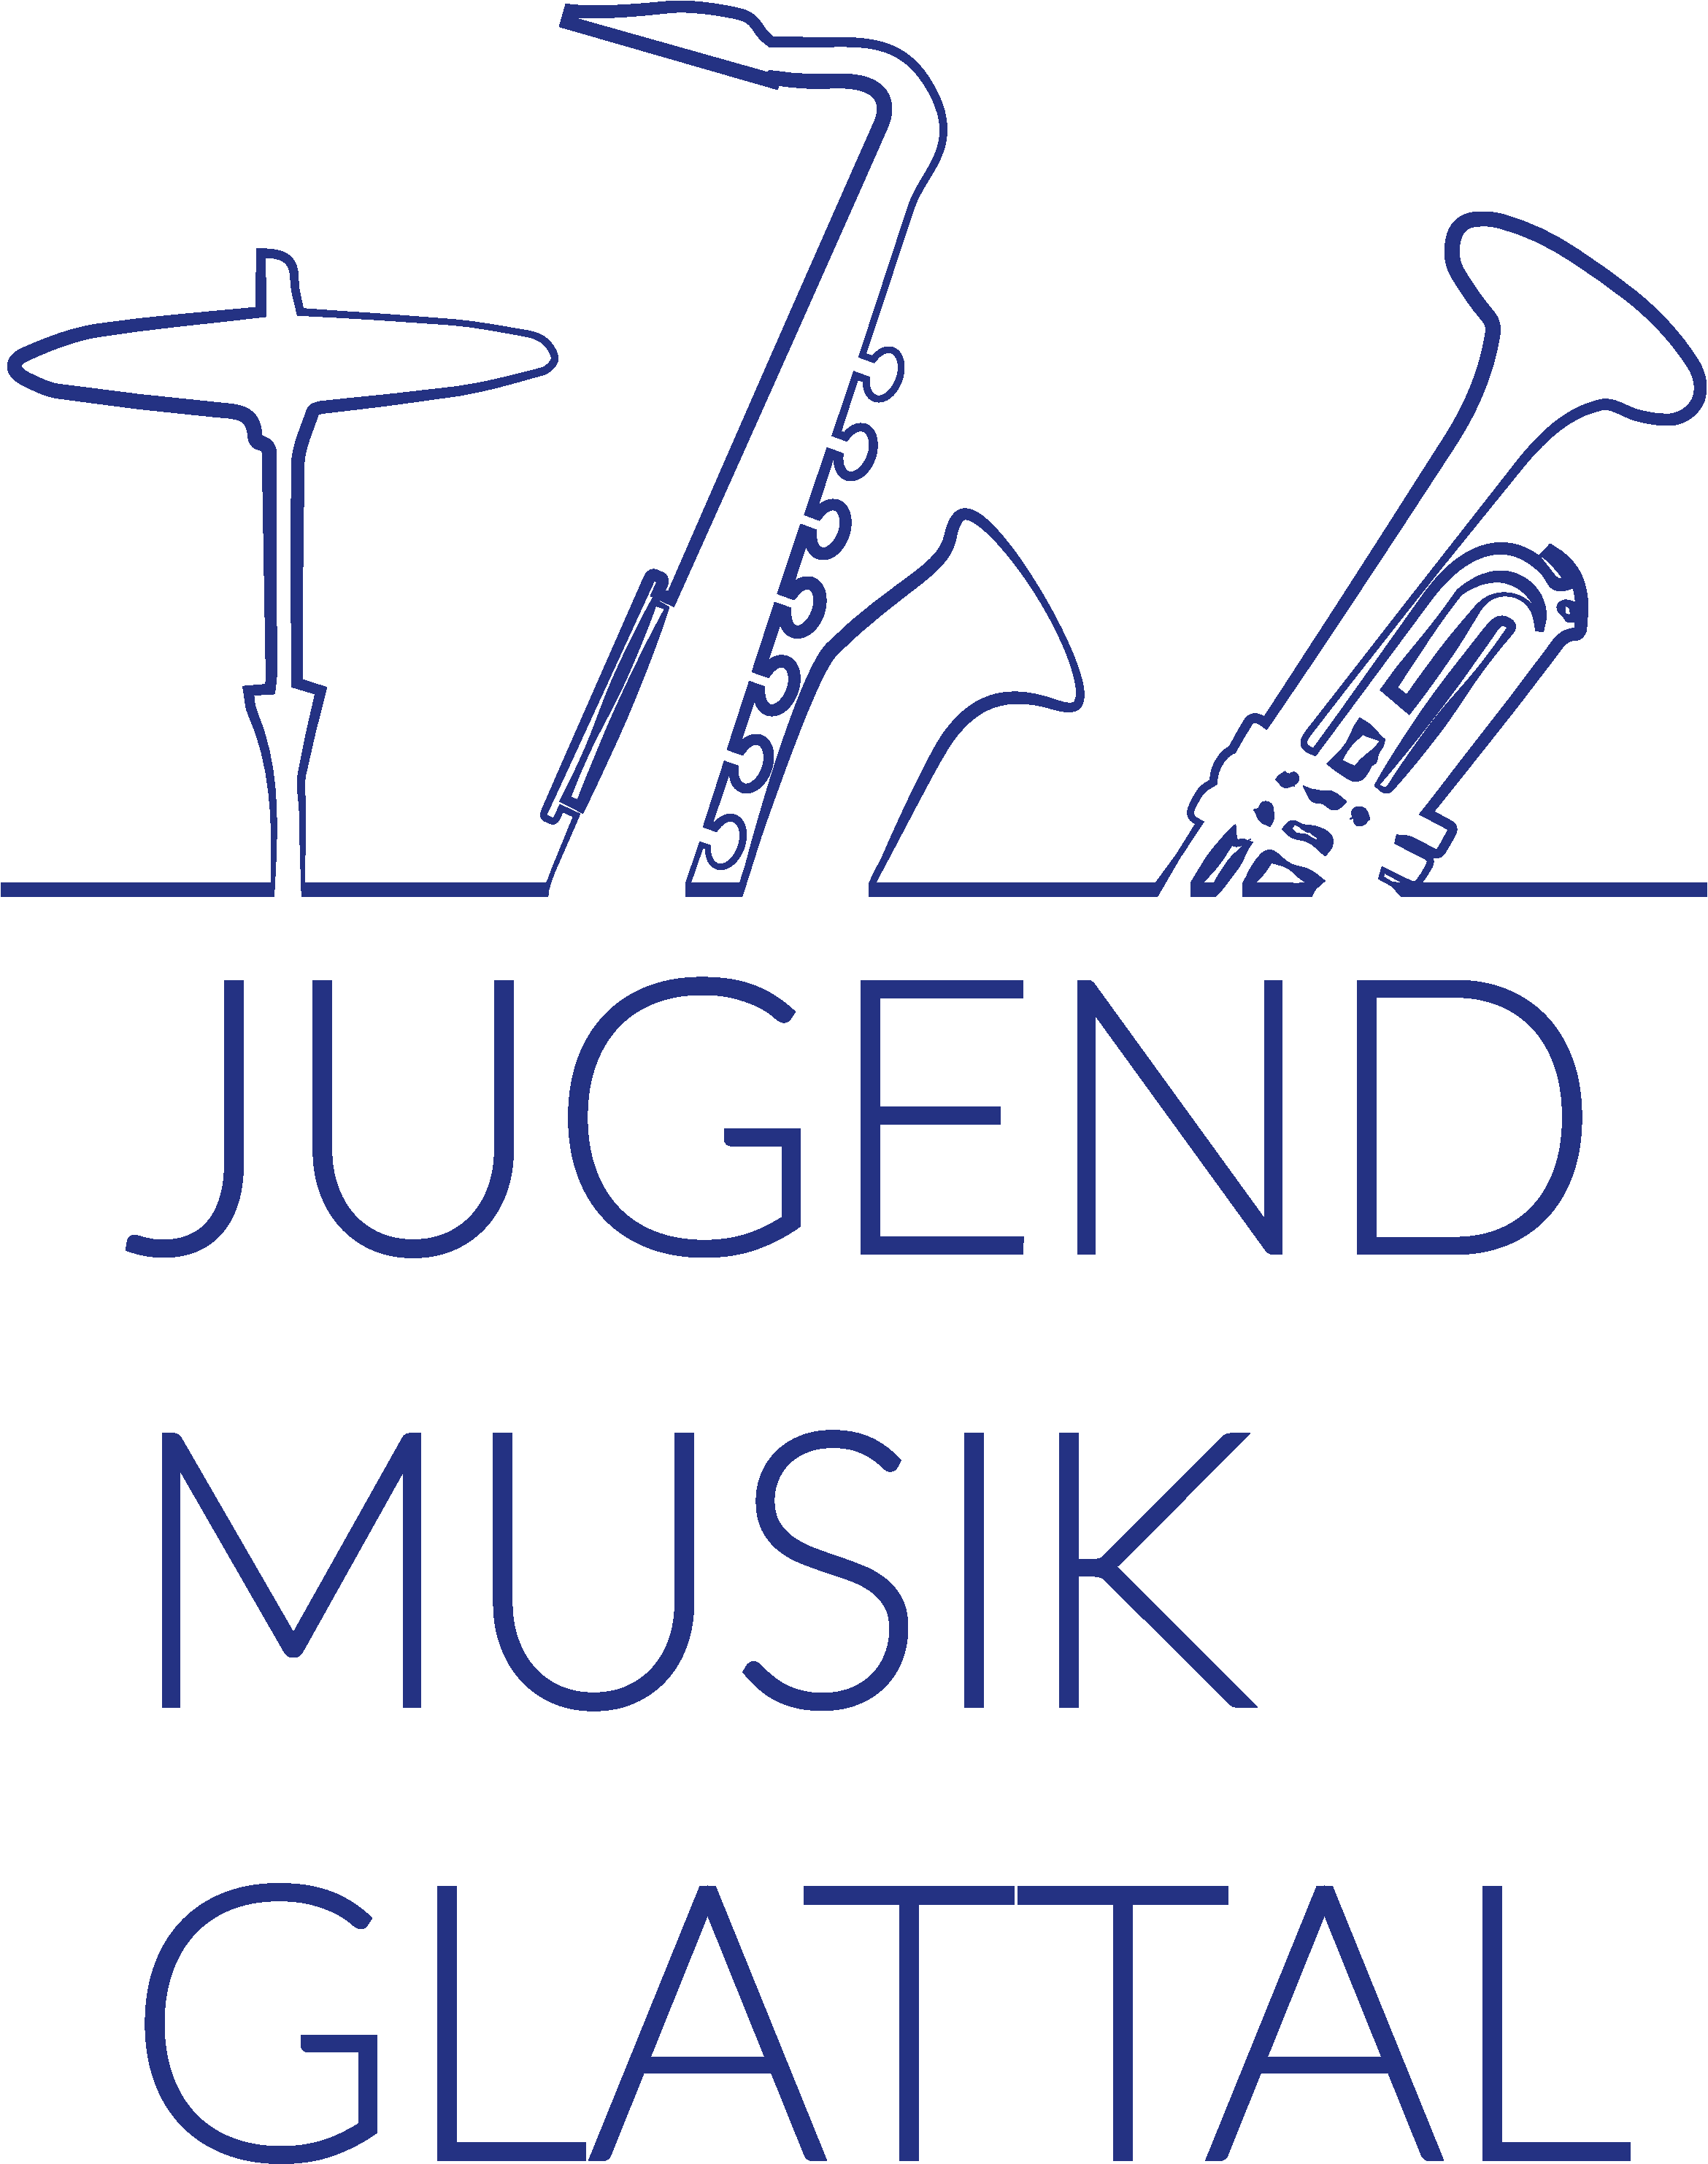 Jugendmusik Glattal